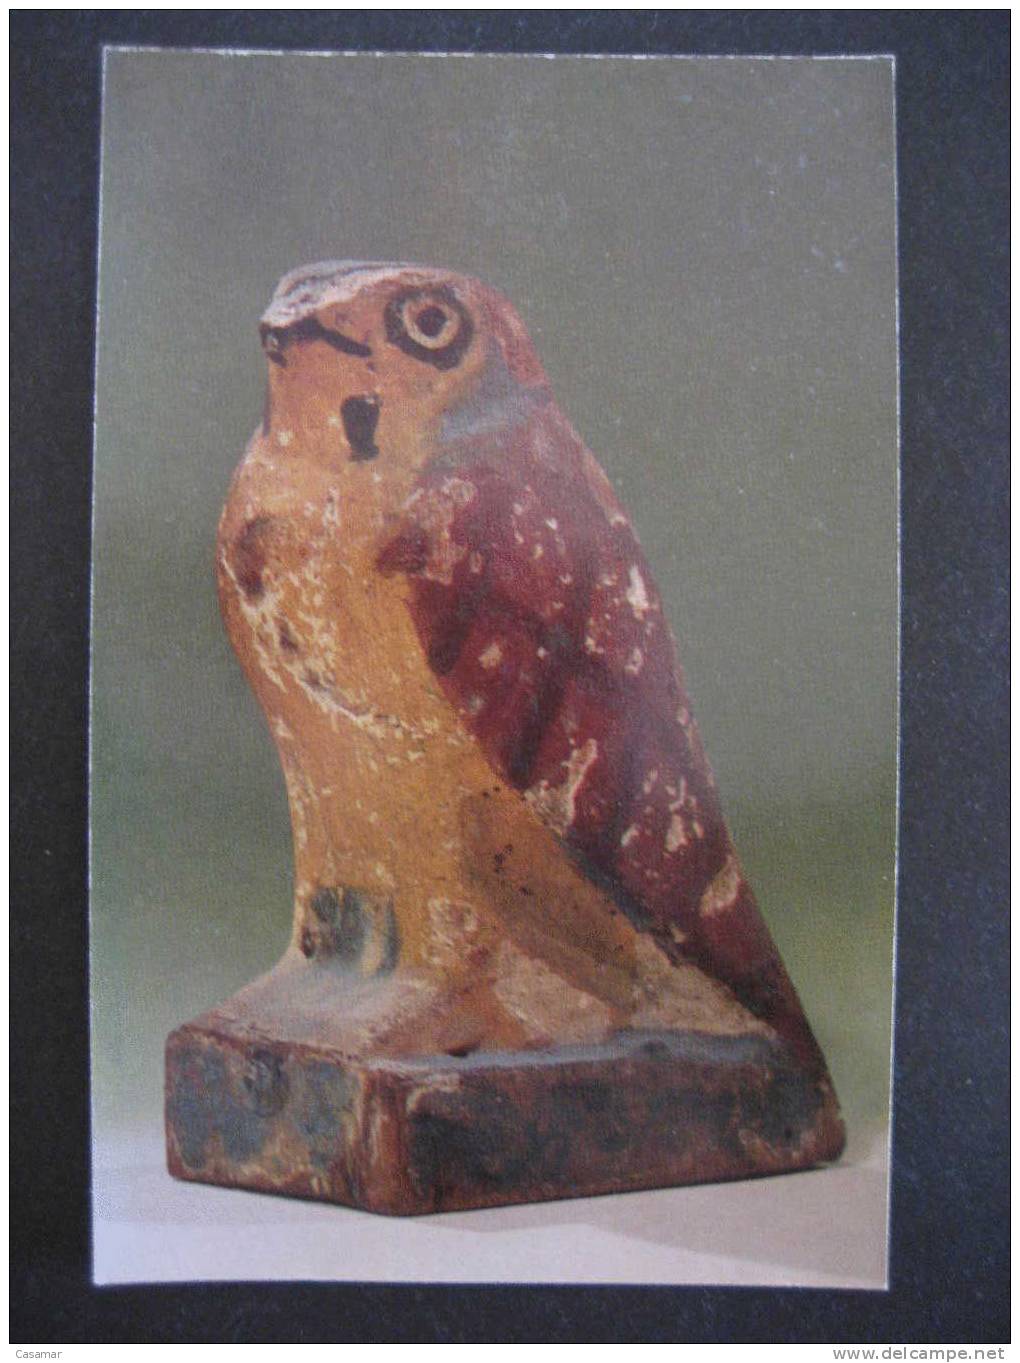 RUSSIA URSS Egypt Egypte Hermitage museum set 16 cards  archeology archeologie prehistory prehistoire art arqueologia